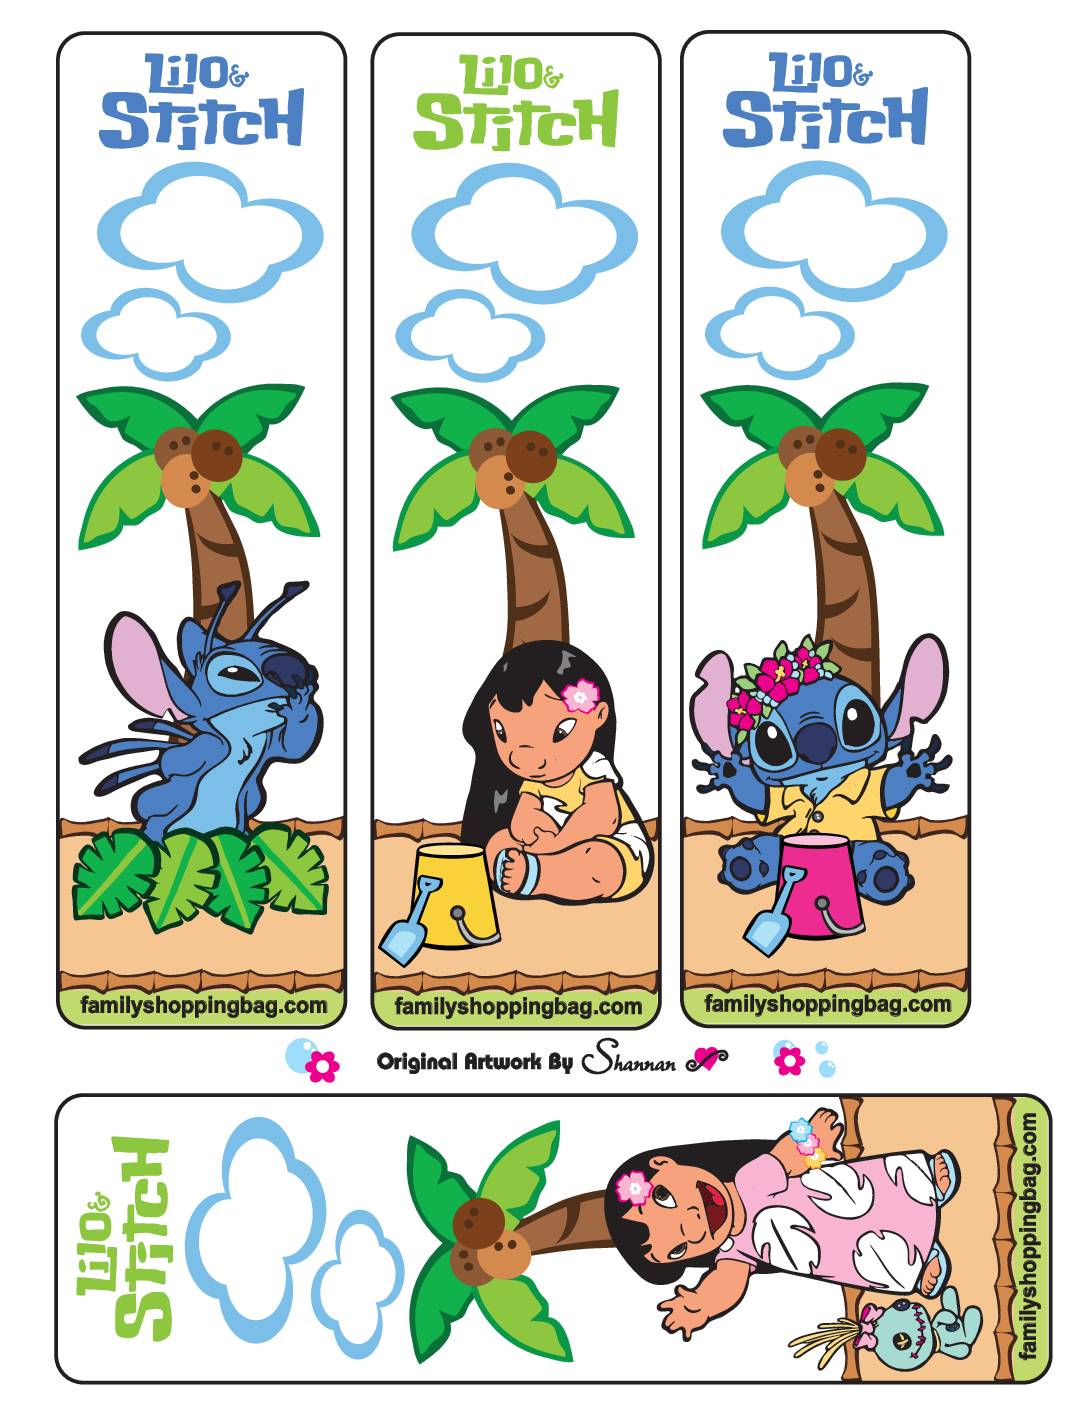 Lilo N' Stitch Coloring Pages, Lilo N' Stitch Party Favors, Stitch